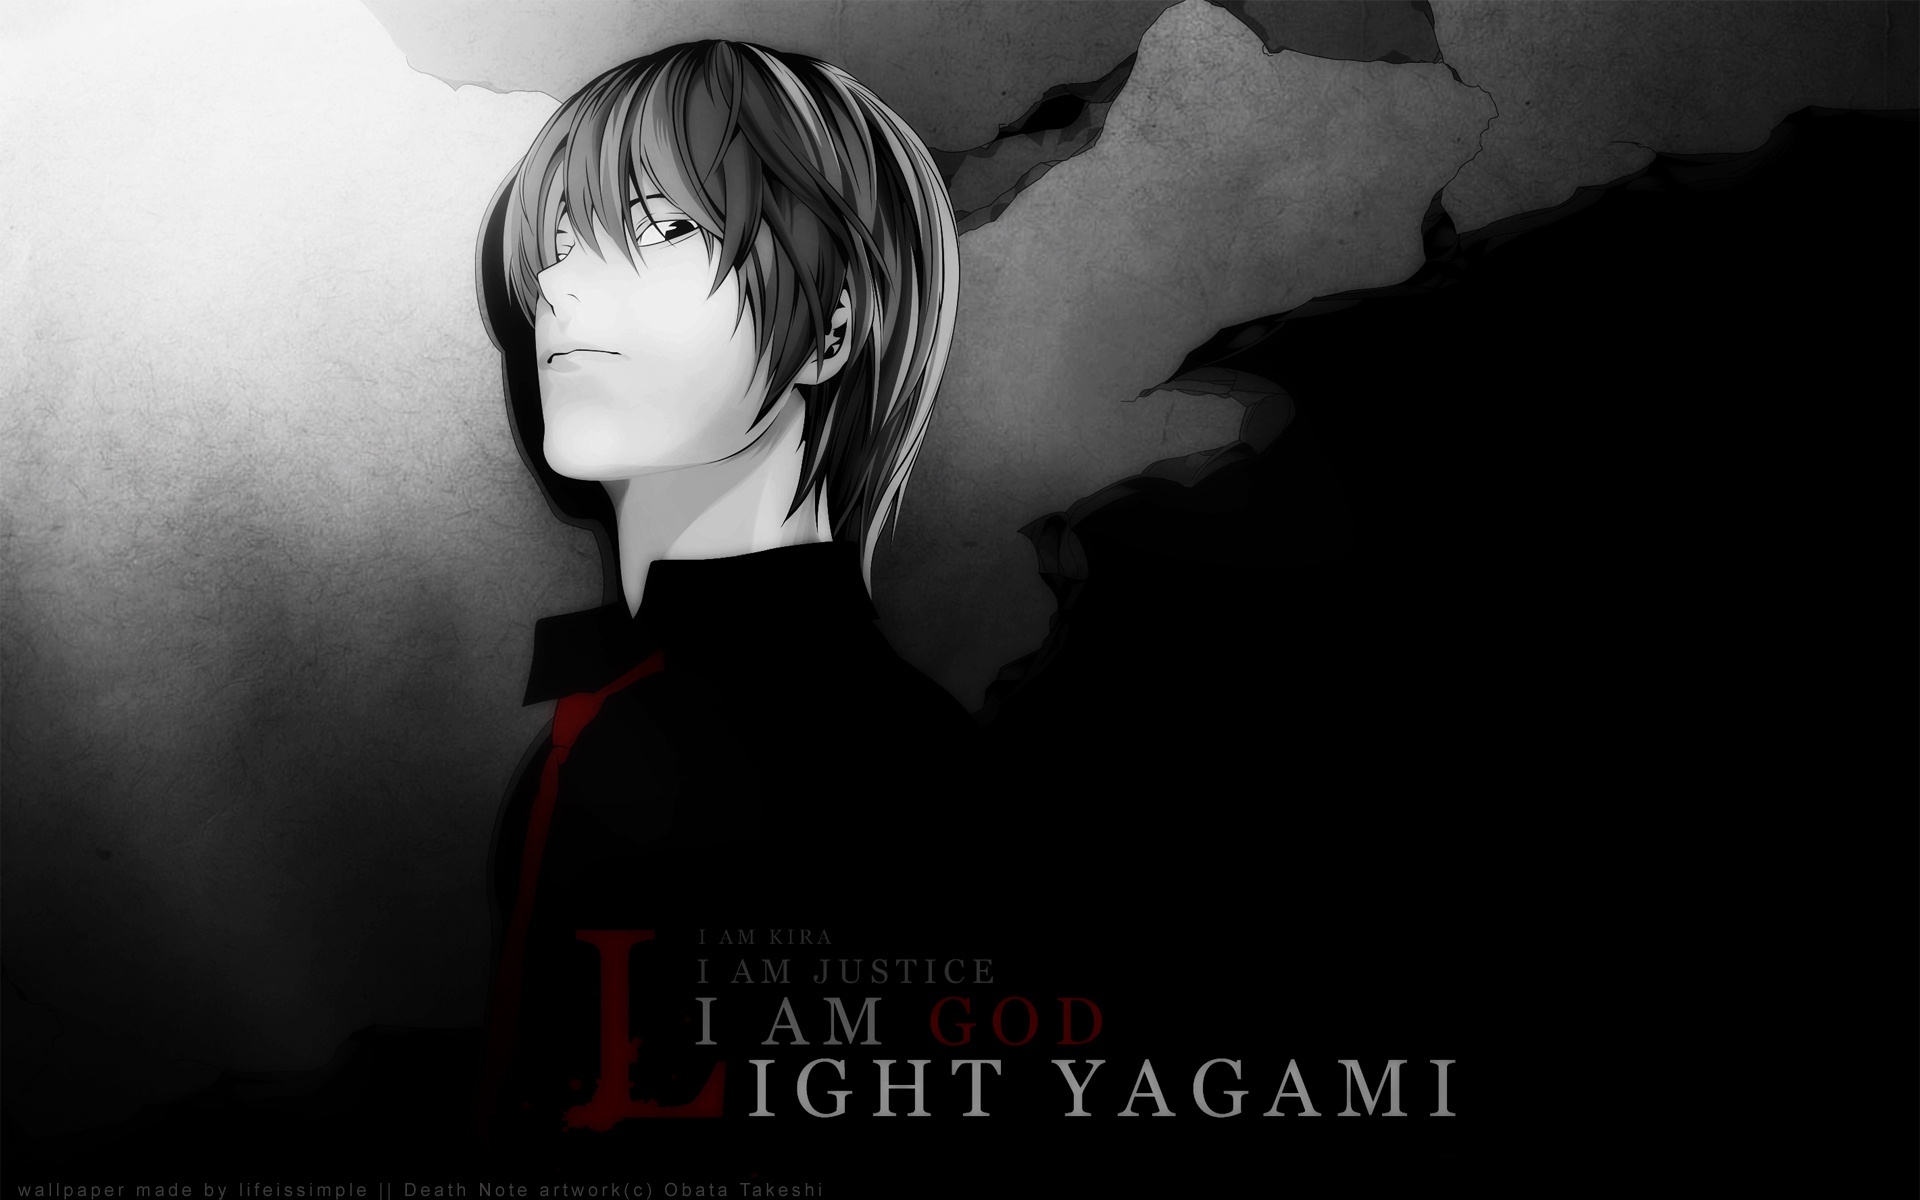 3d обои Кира из аниме Death note (I am Kira. I am justice. A am God. A am Light Yagami)  мужчины # 57158